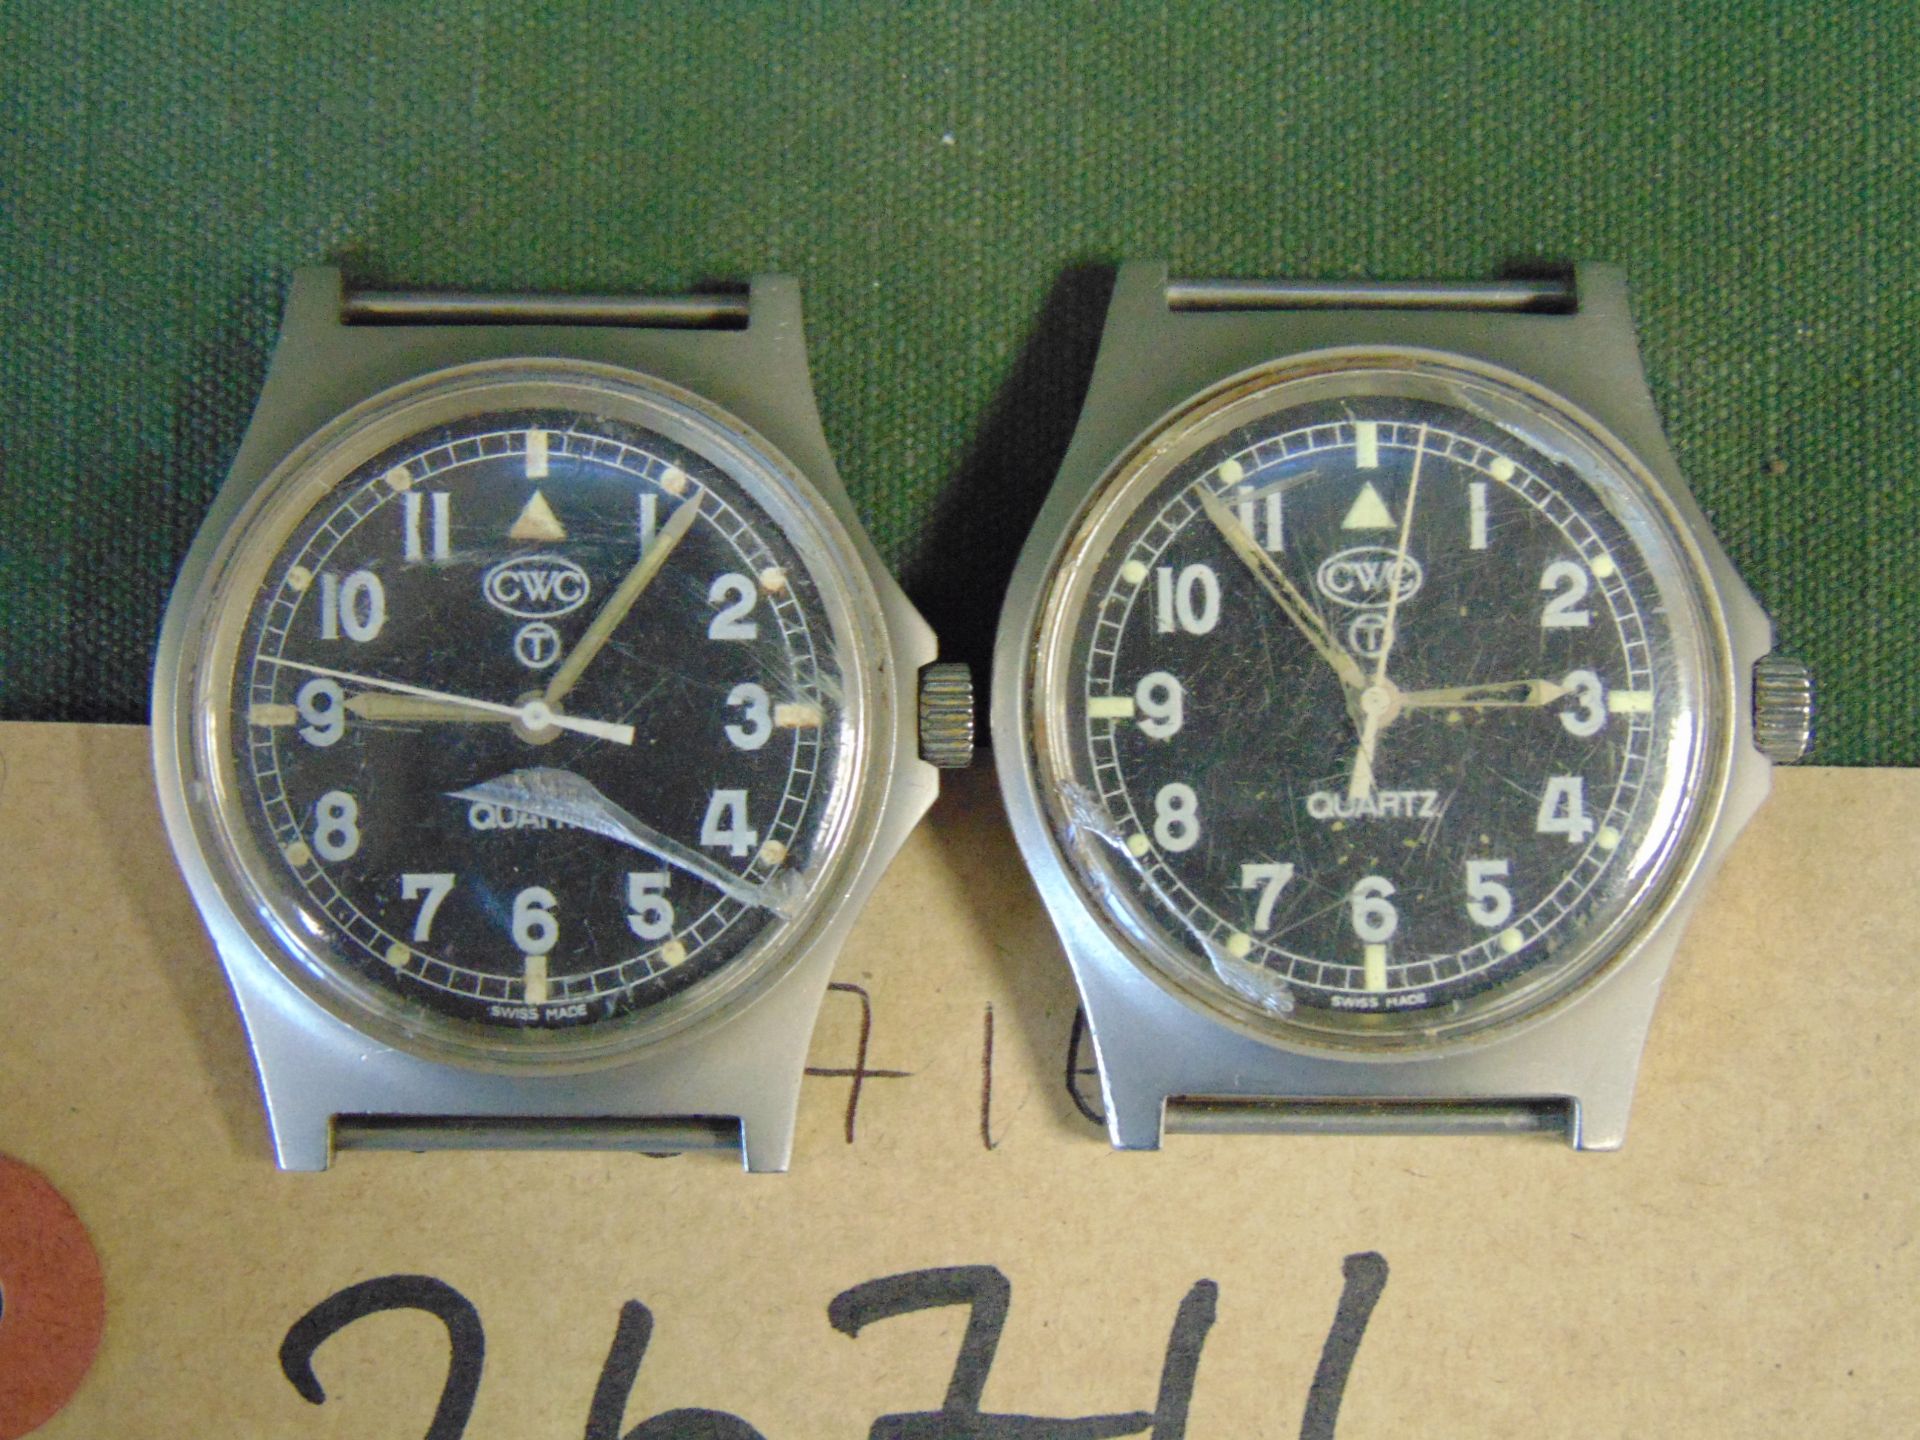 2 x CWC 0522 Royal Marines quartz wrist watches - Image 2 of 3